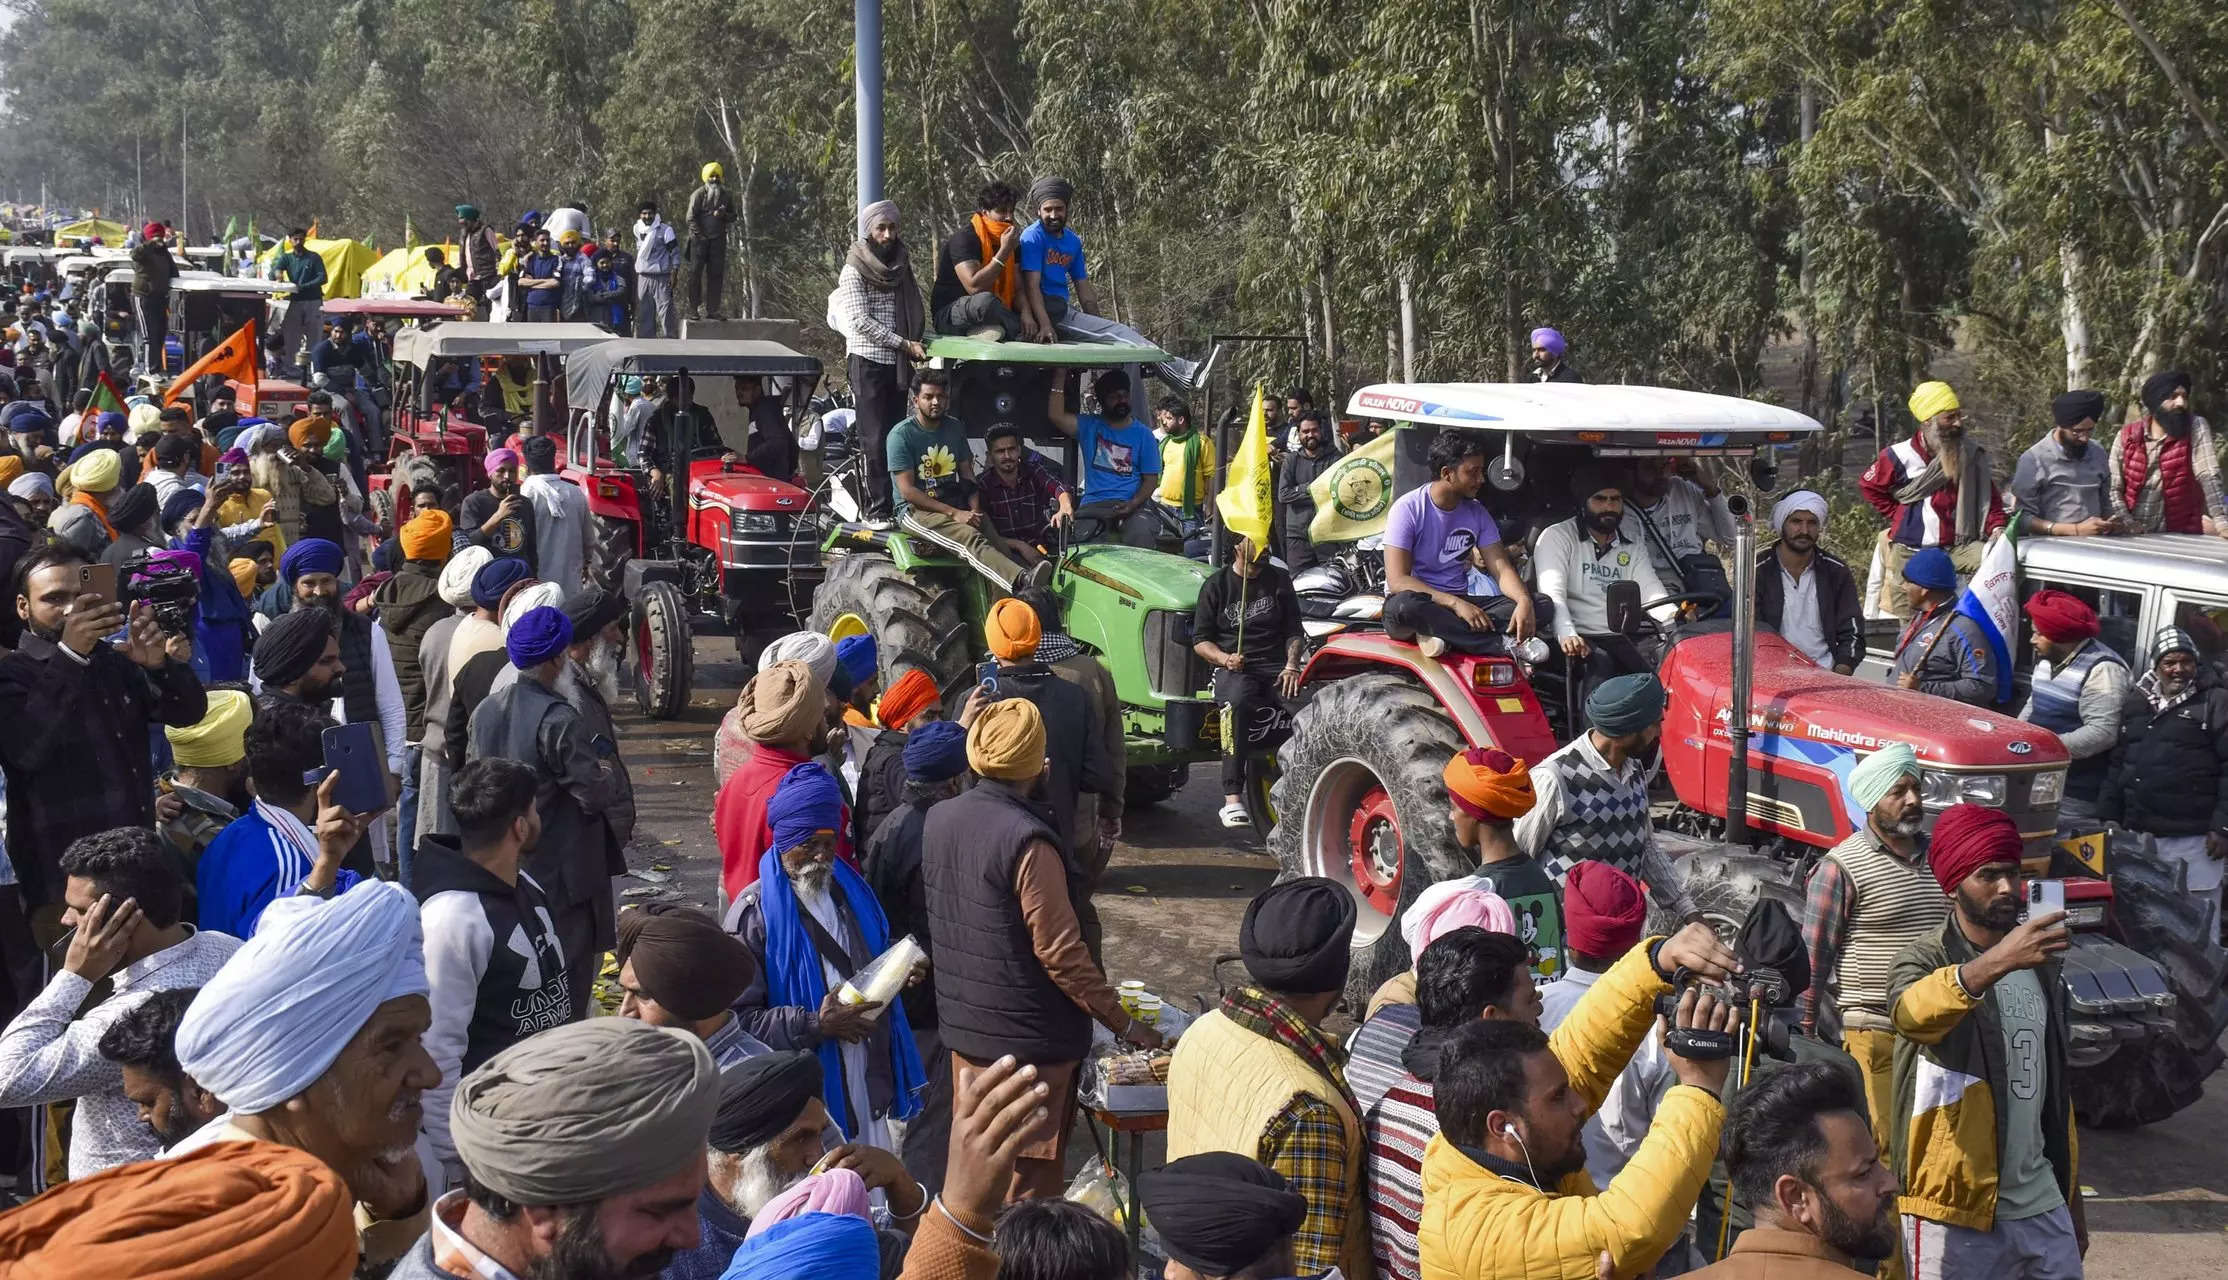 Will march towards Delhi peacefully: Farmer leader Jagjit Singh Dallewal 